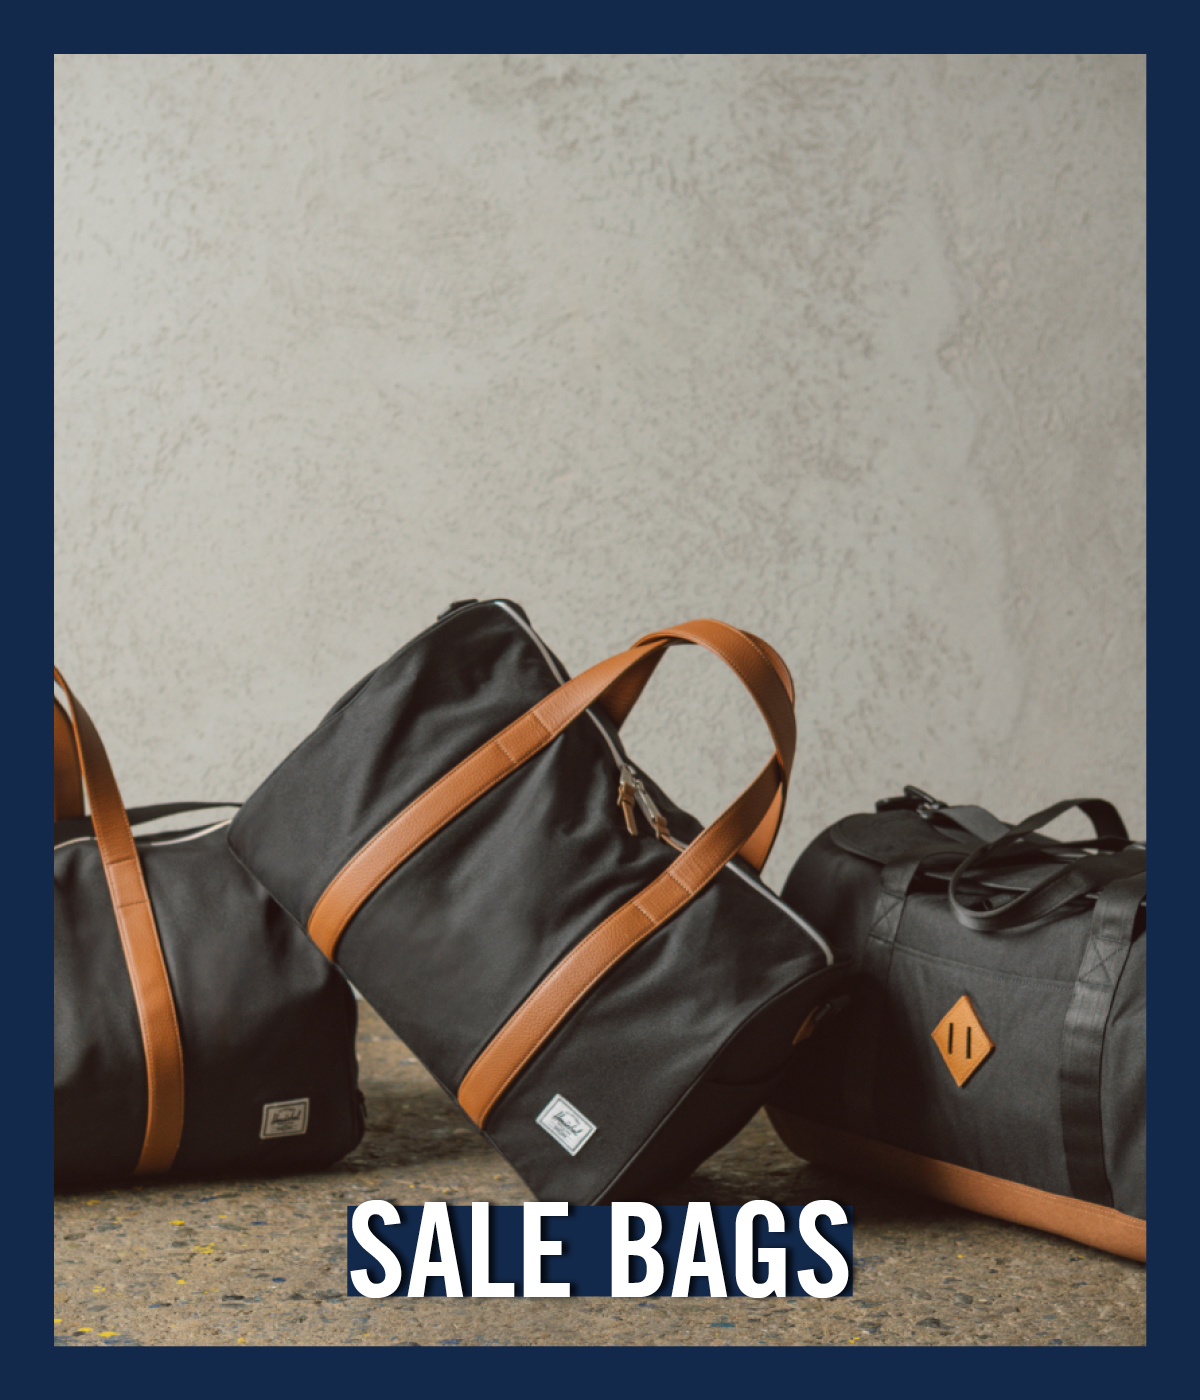 Sale Bags